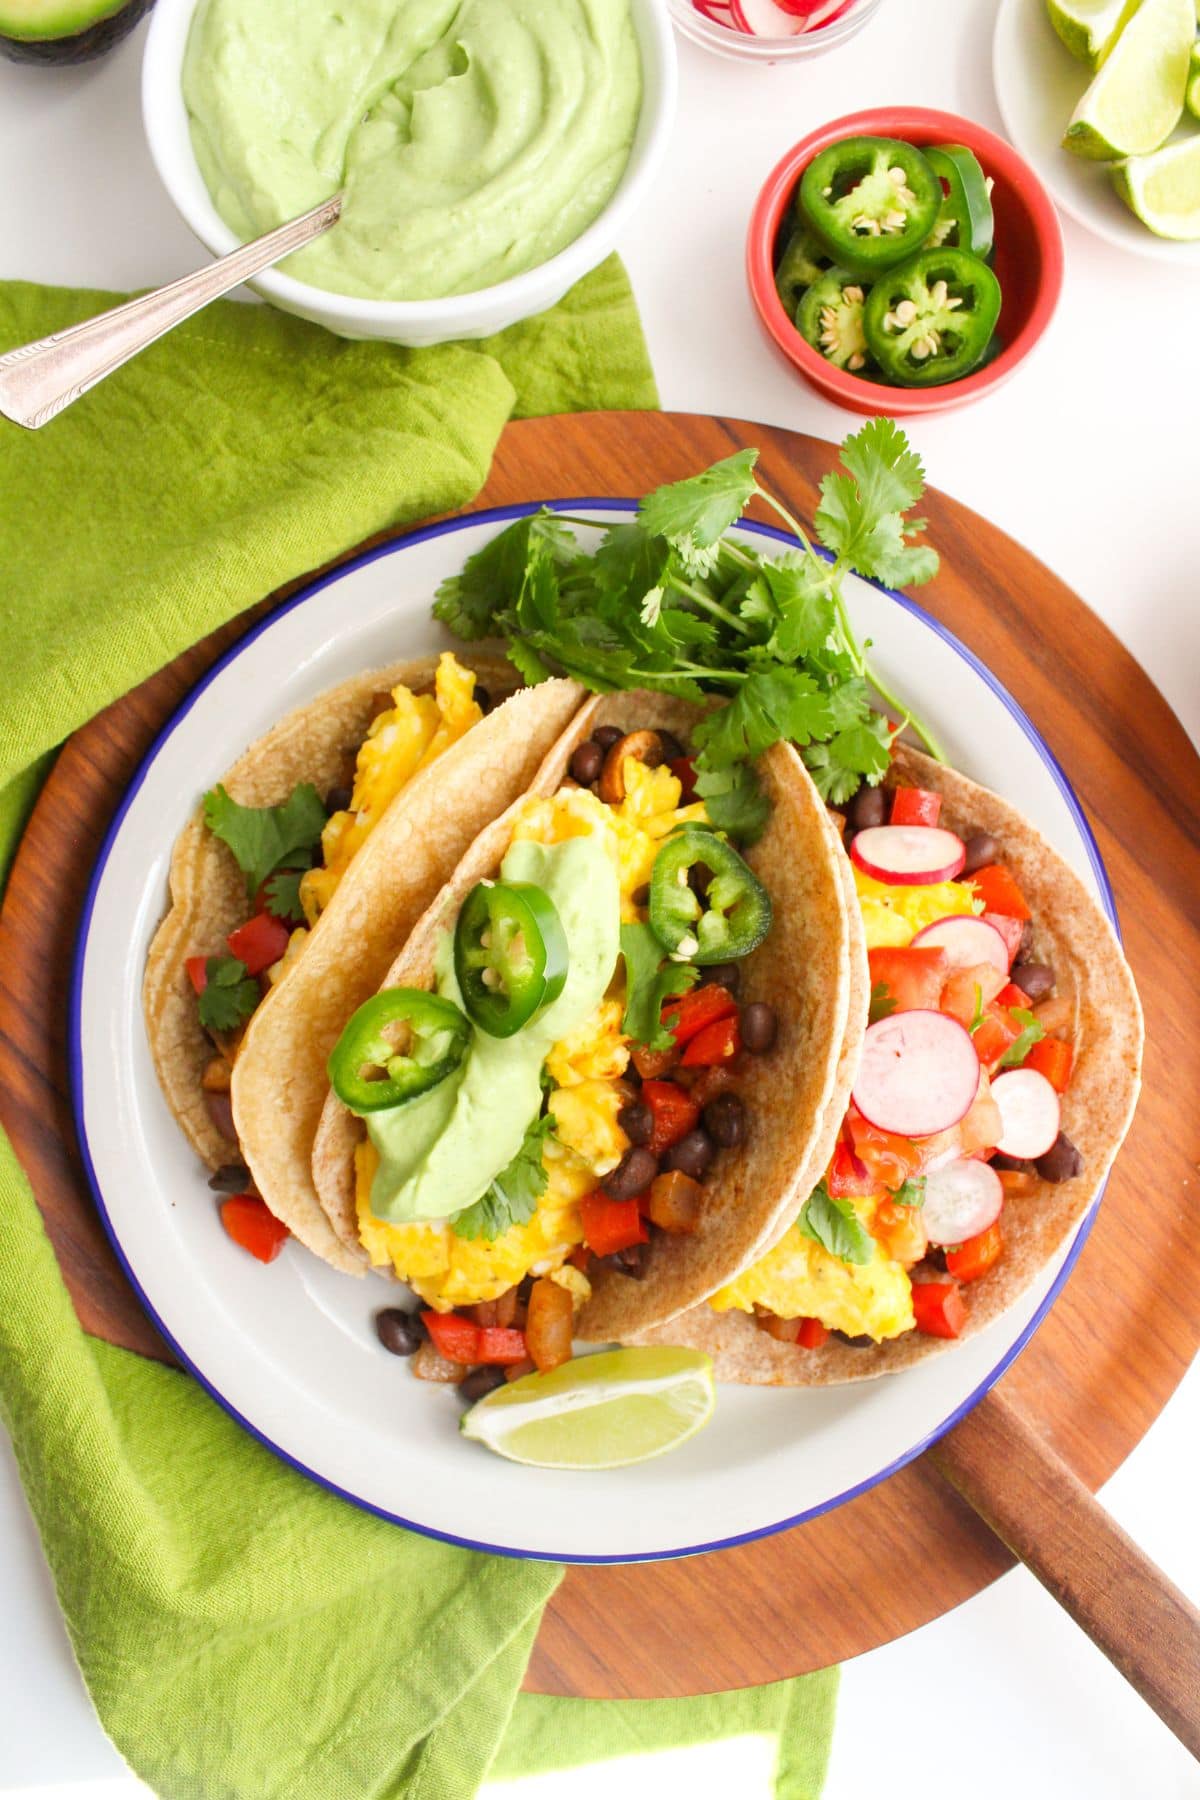 egg tacos with vegetables, black beans, and avocado crema